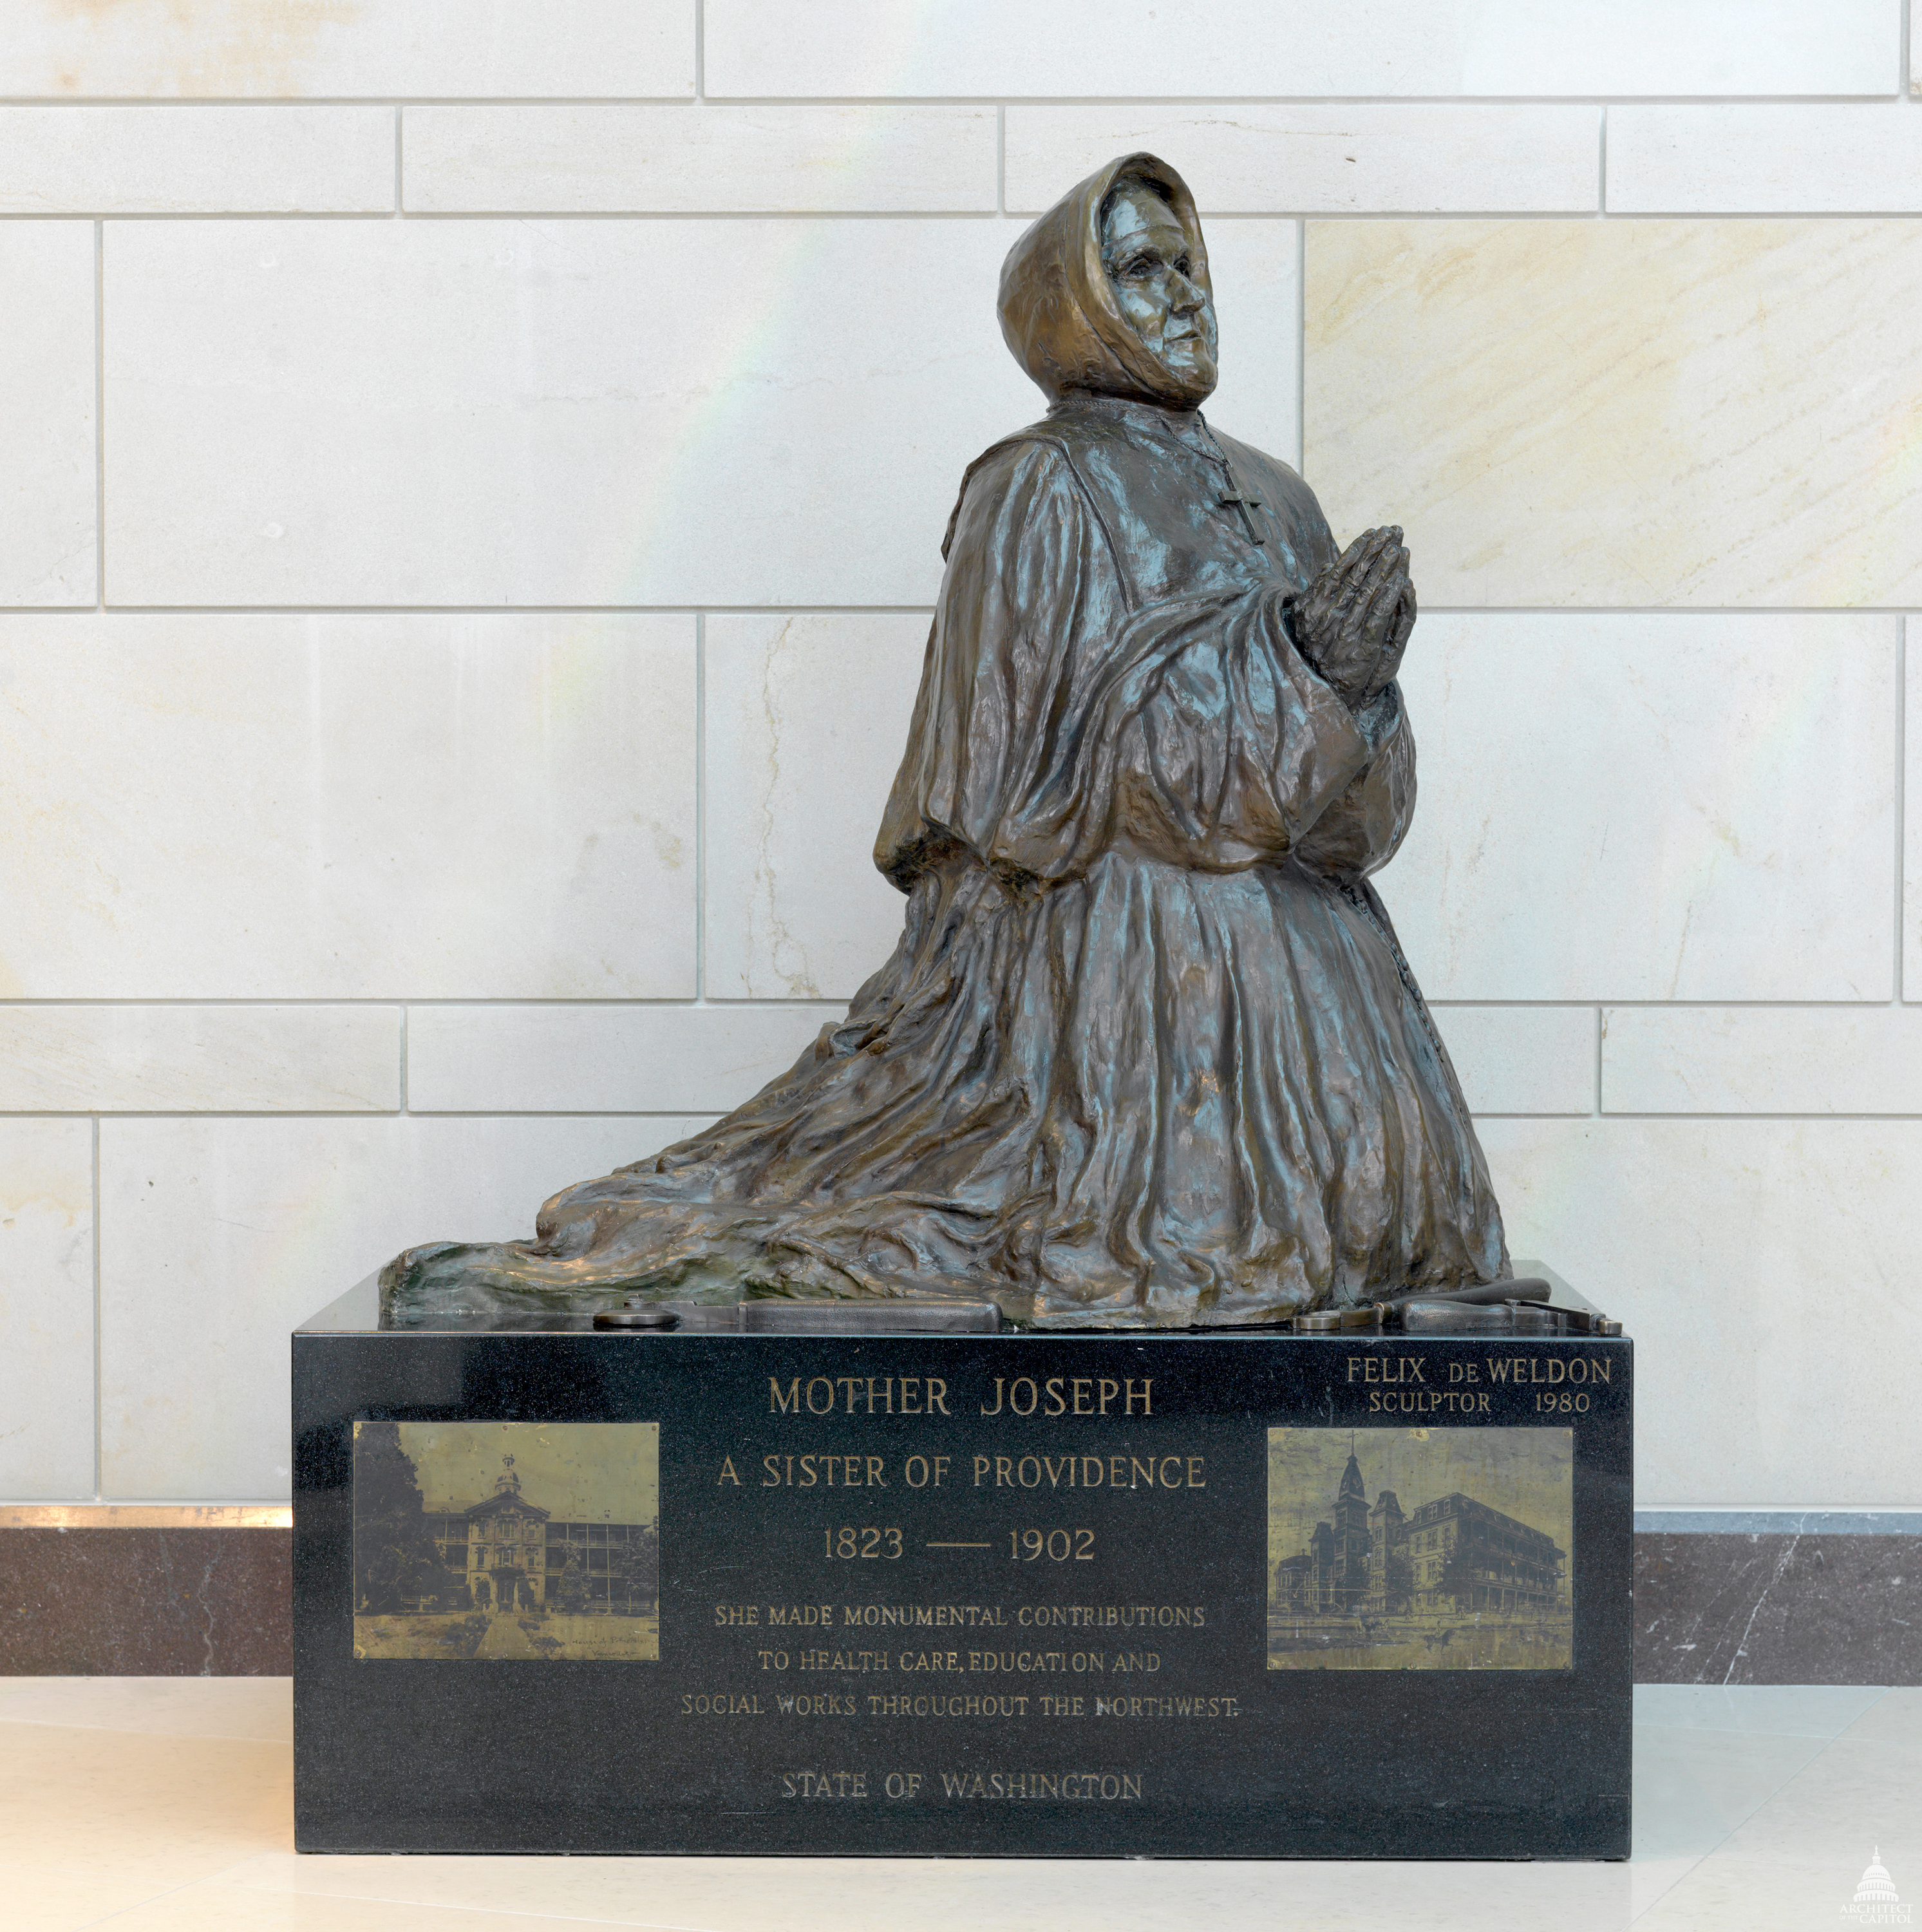 Mother Joseph statue in Washington